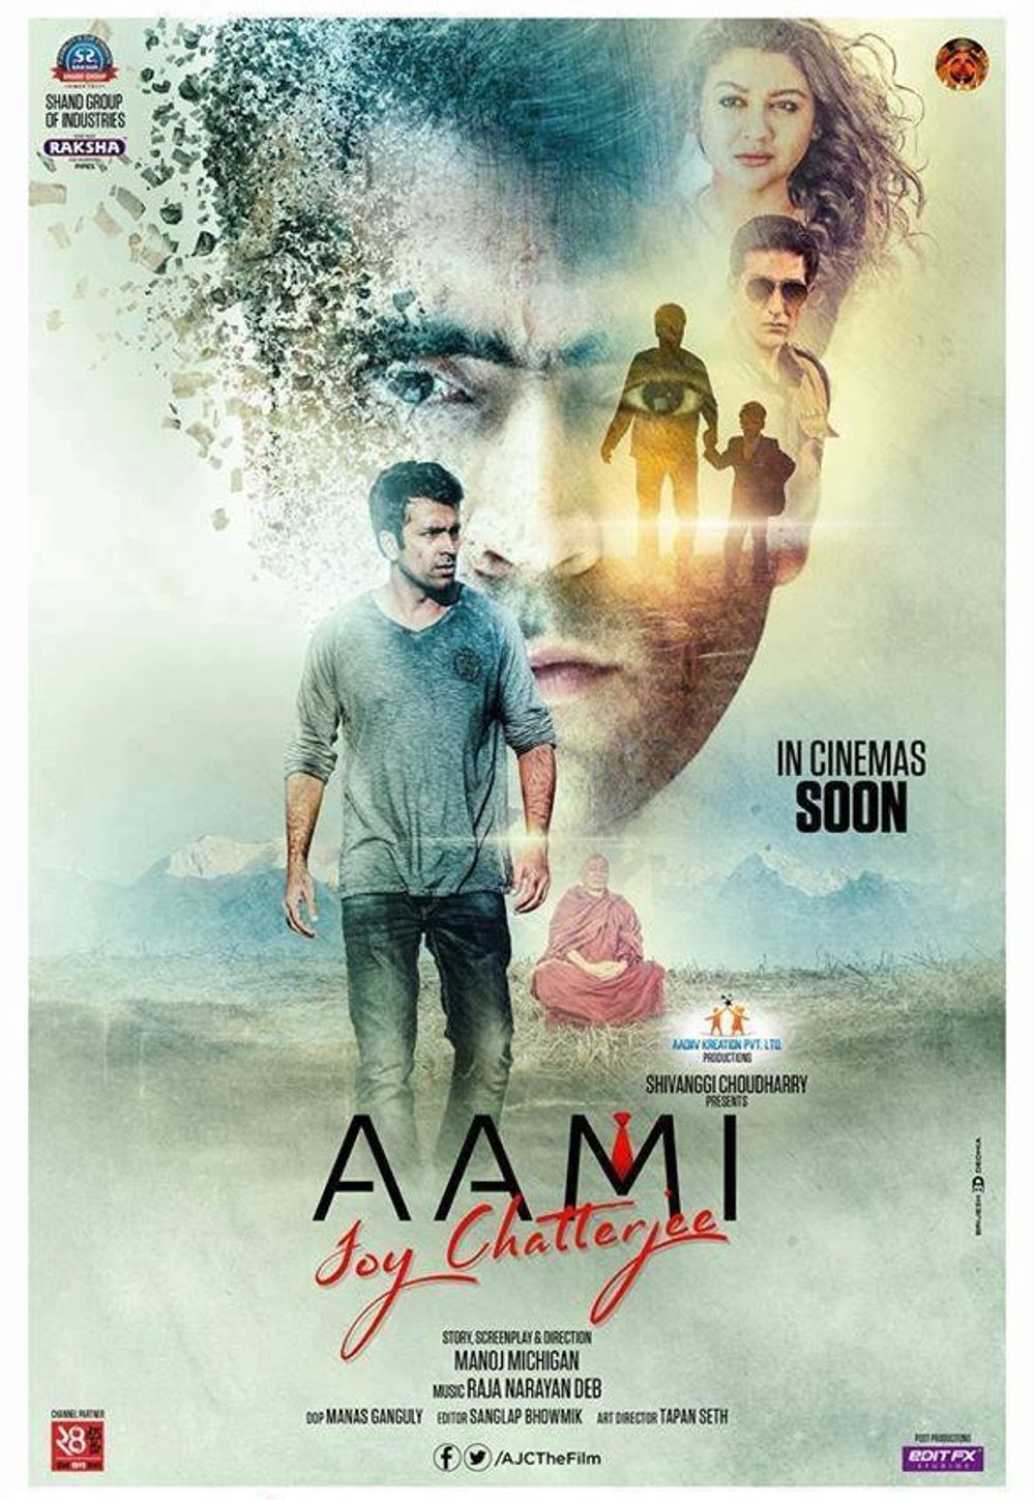 Aami Joy Chatterjee 2018 Bengali Full Movie 720p Download & Watch Online